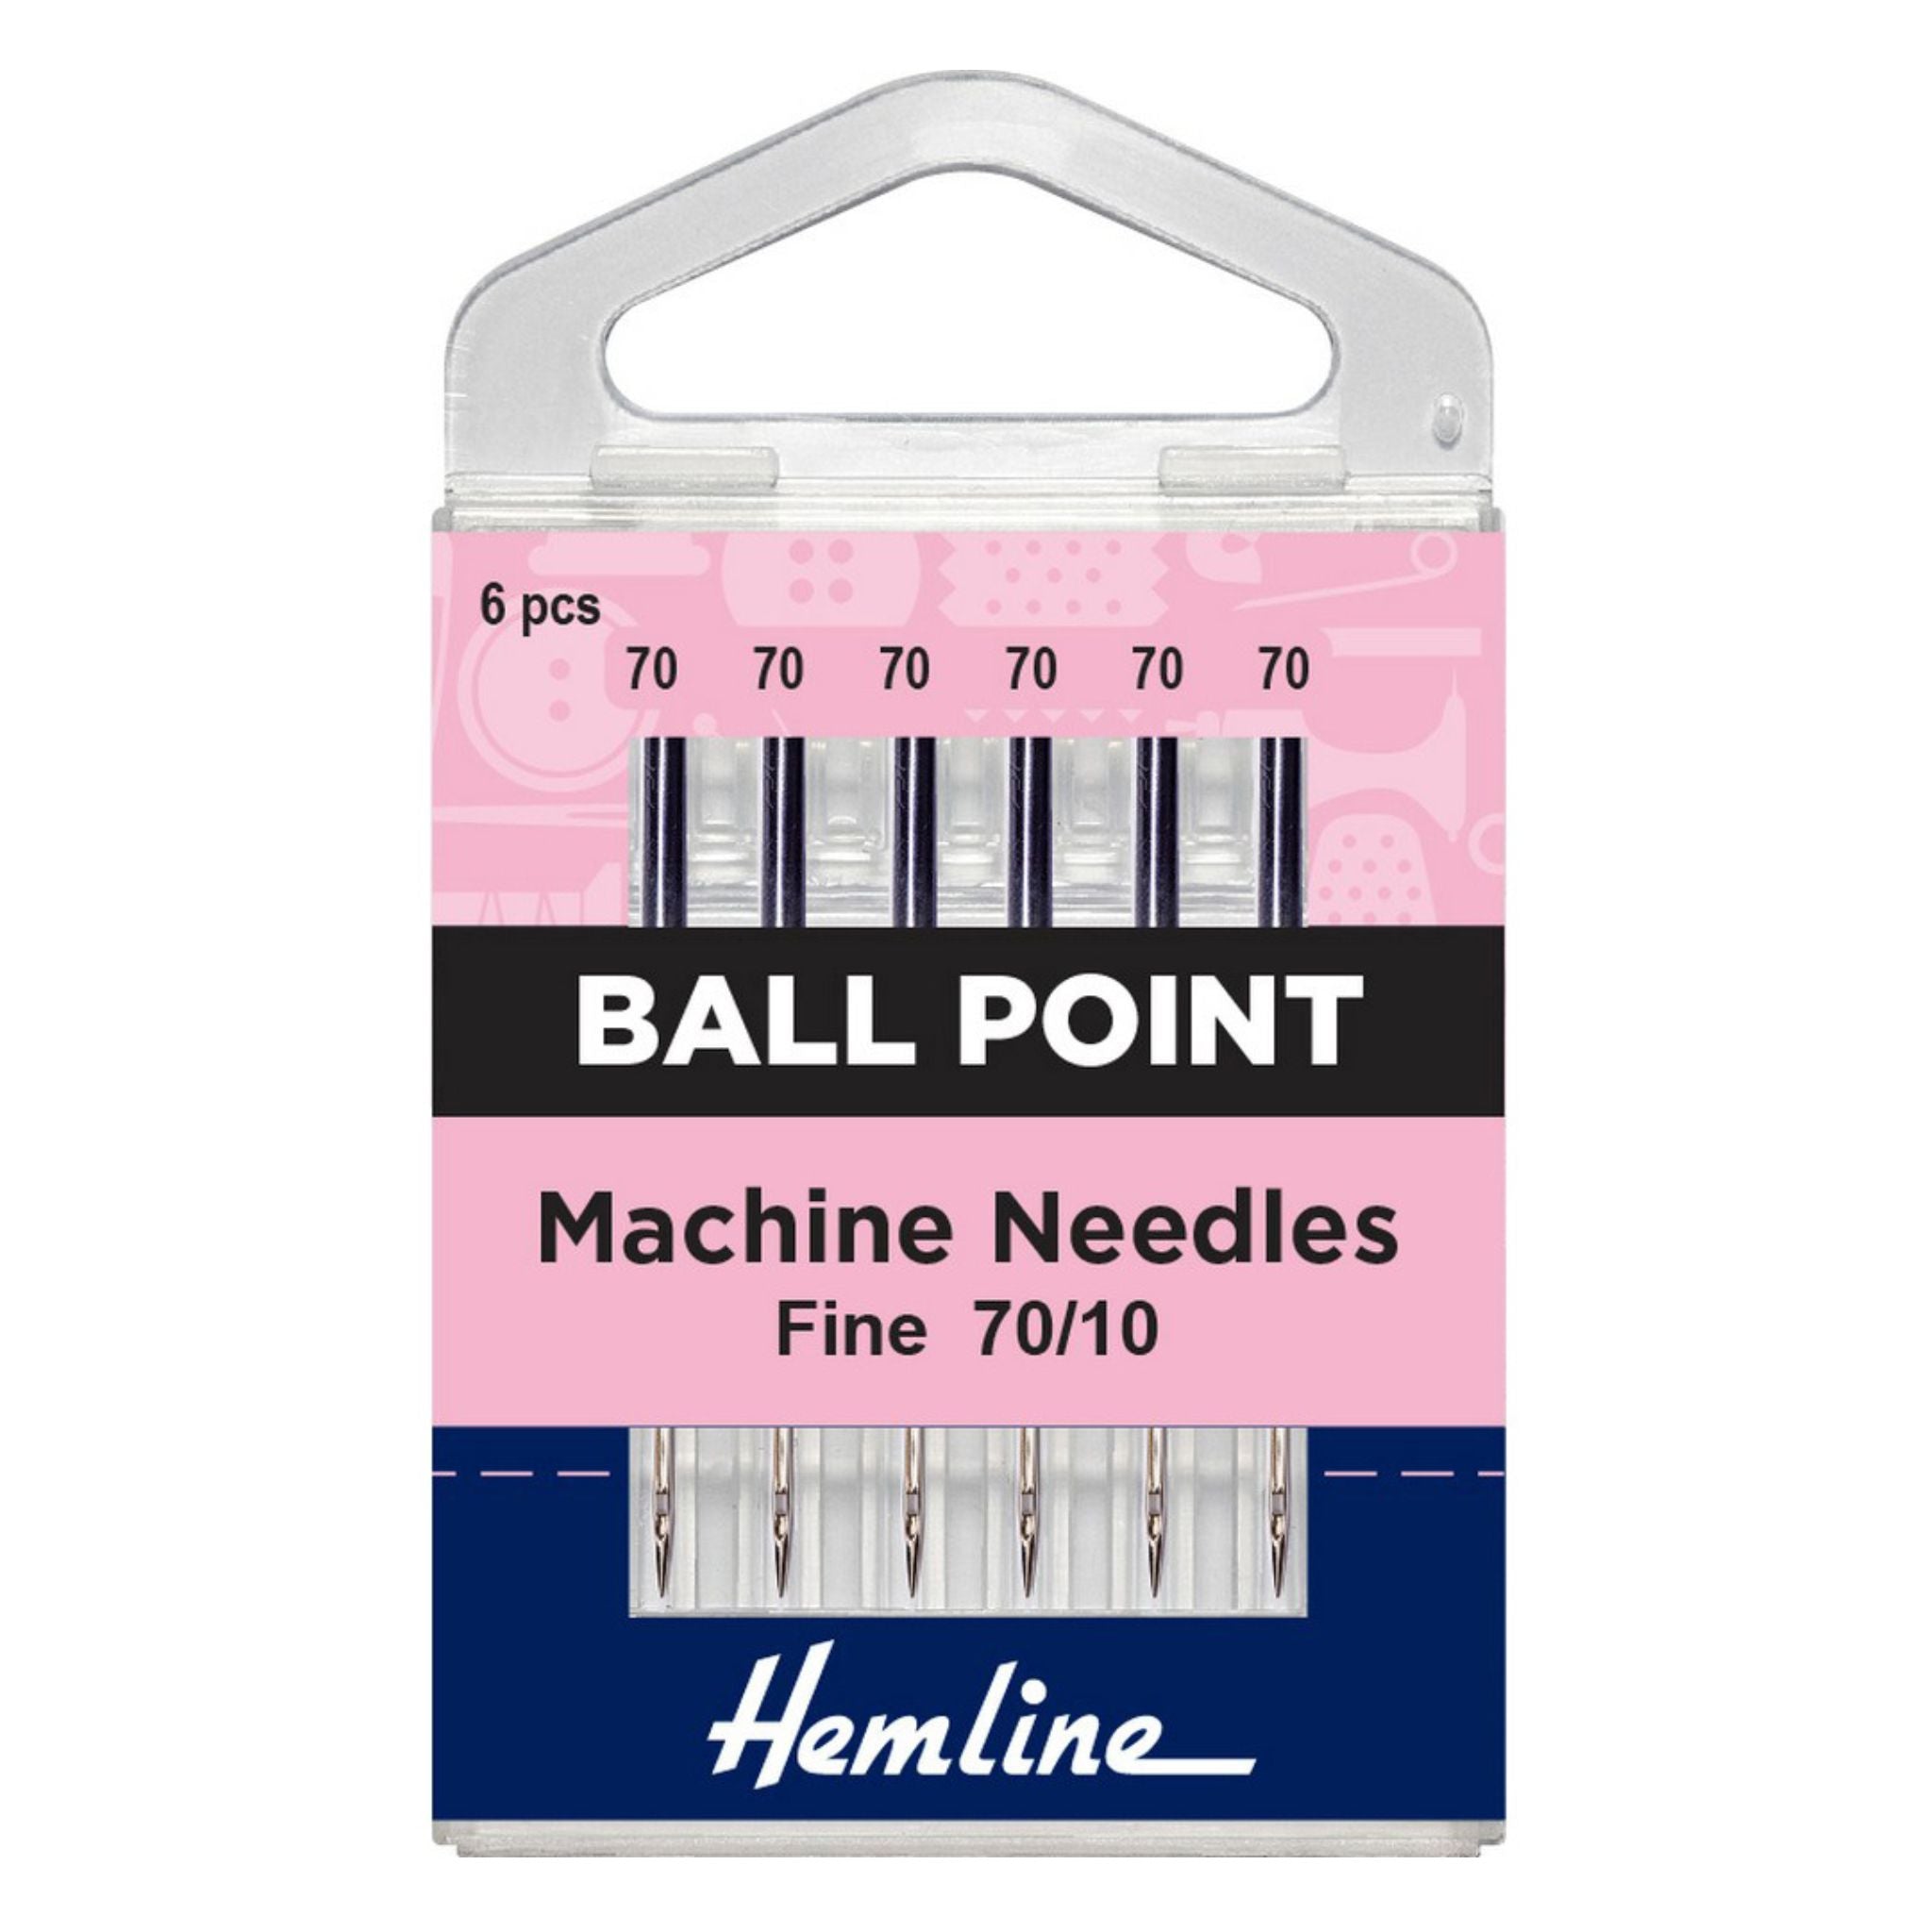 Hemline ball point sewing machine needles - Fine 70/10